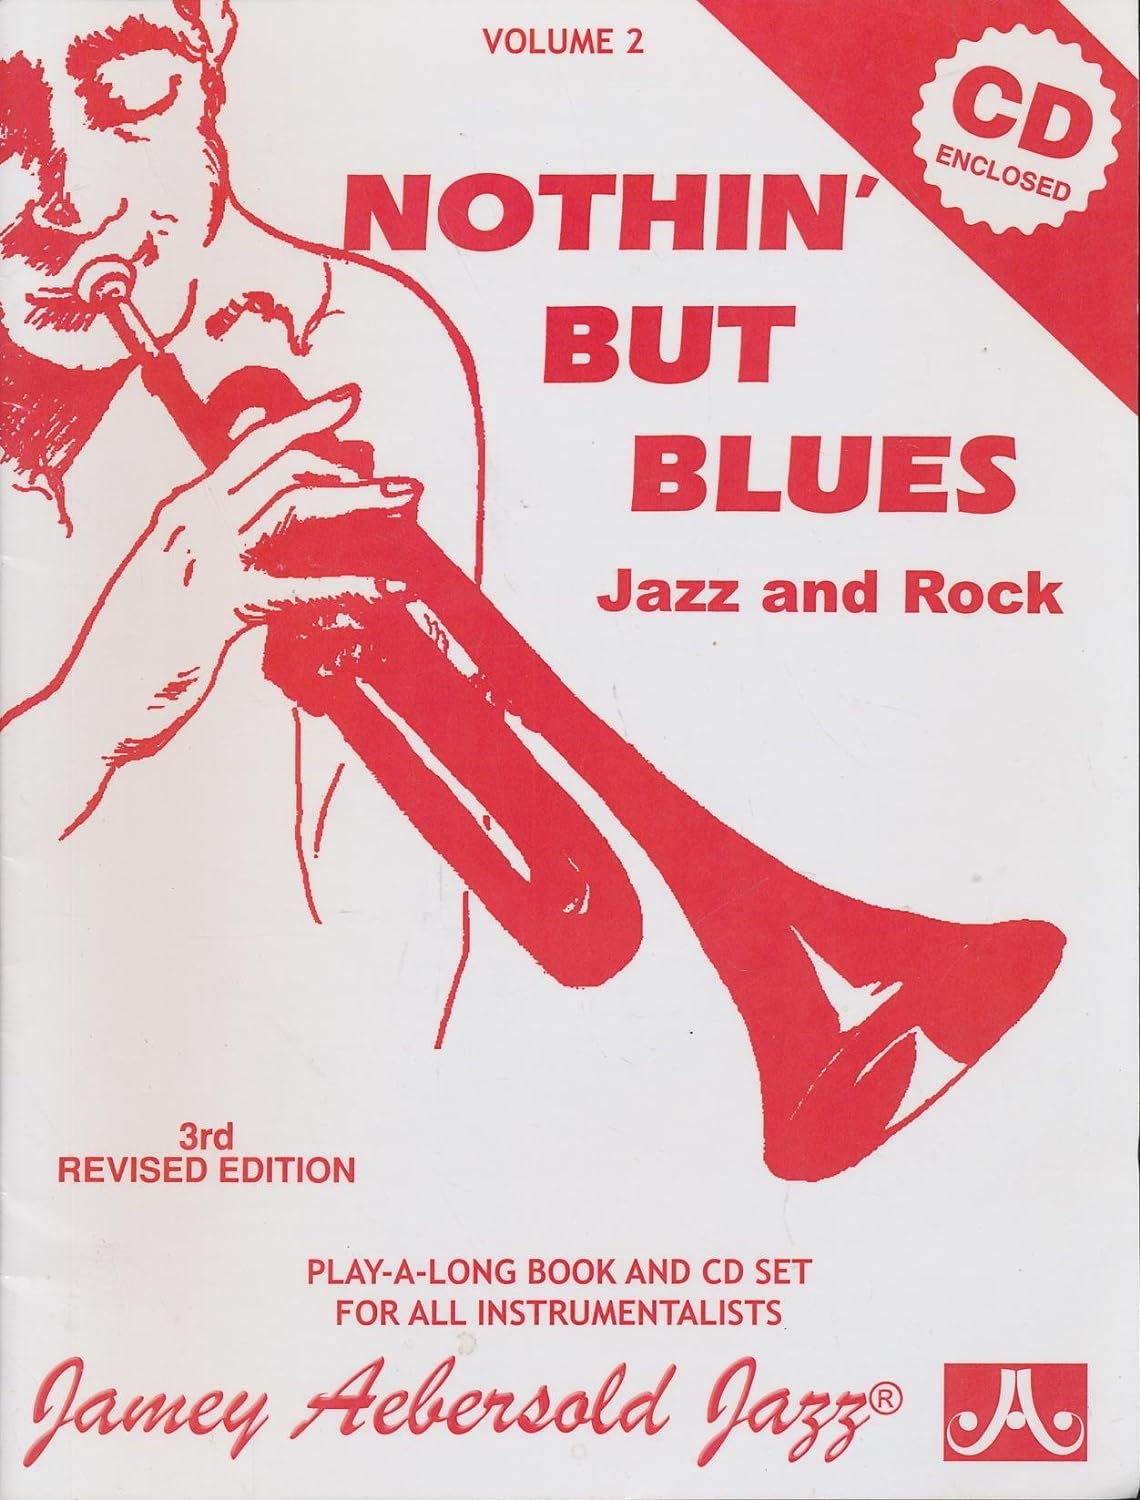 Nothin' but Blues, Jamey Aebersold Volume 2